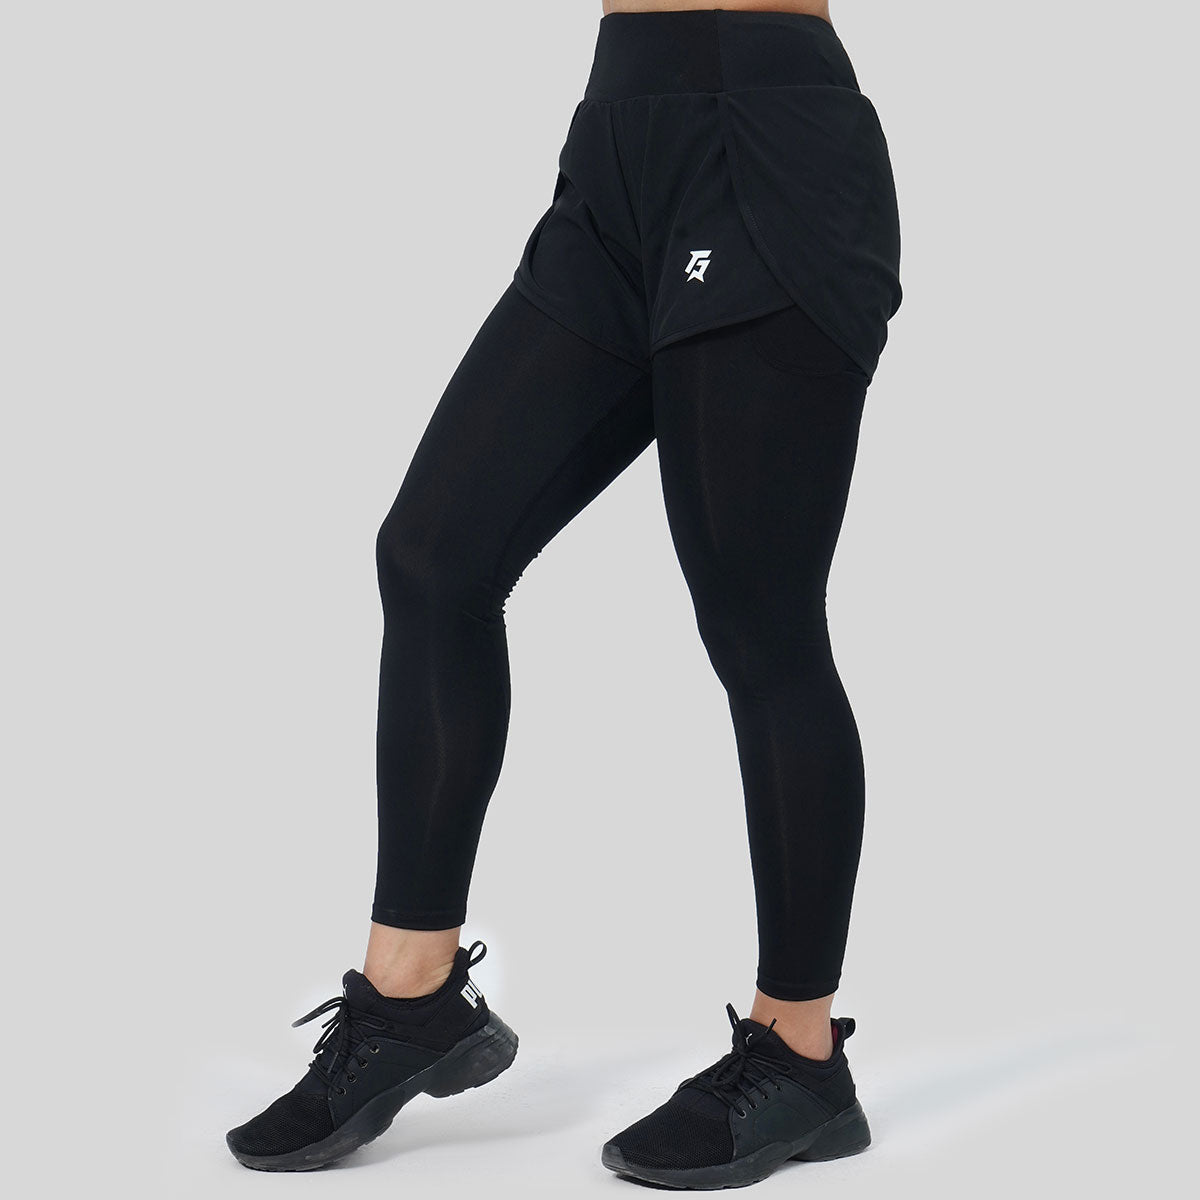 Compression Legging Shorts (Black)